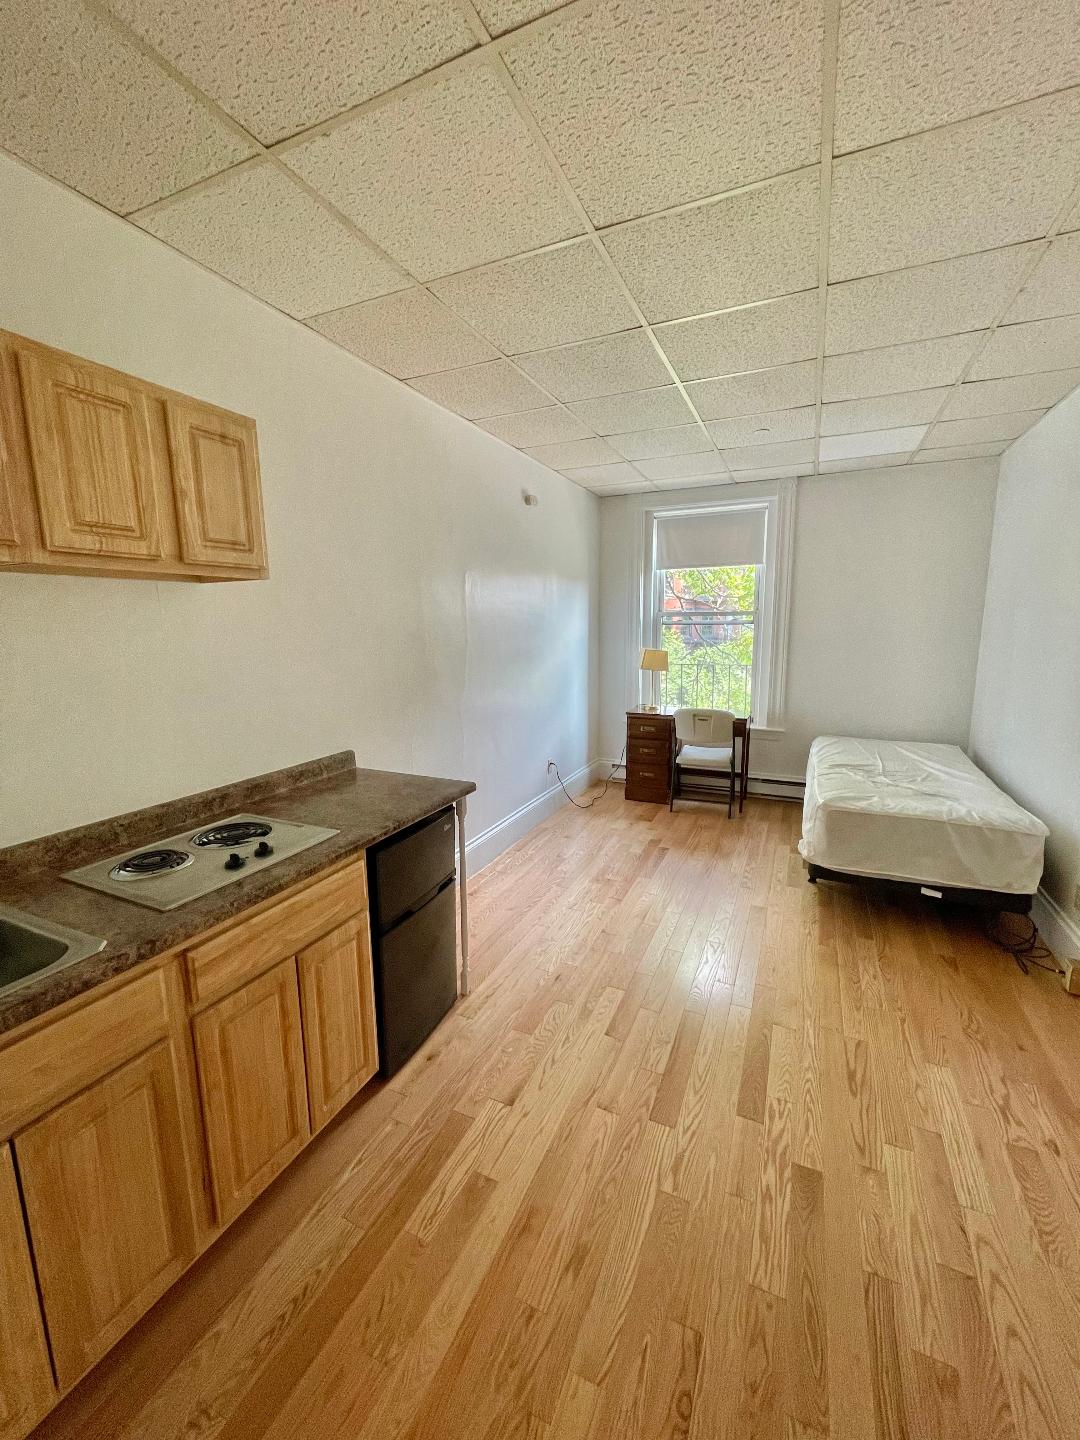 Studio, 1 Bath apartment in Boston, Kenmore for $2,095